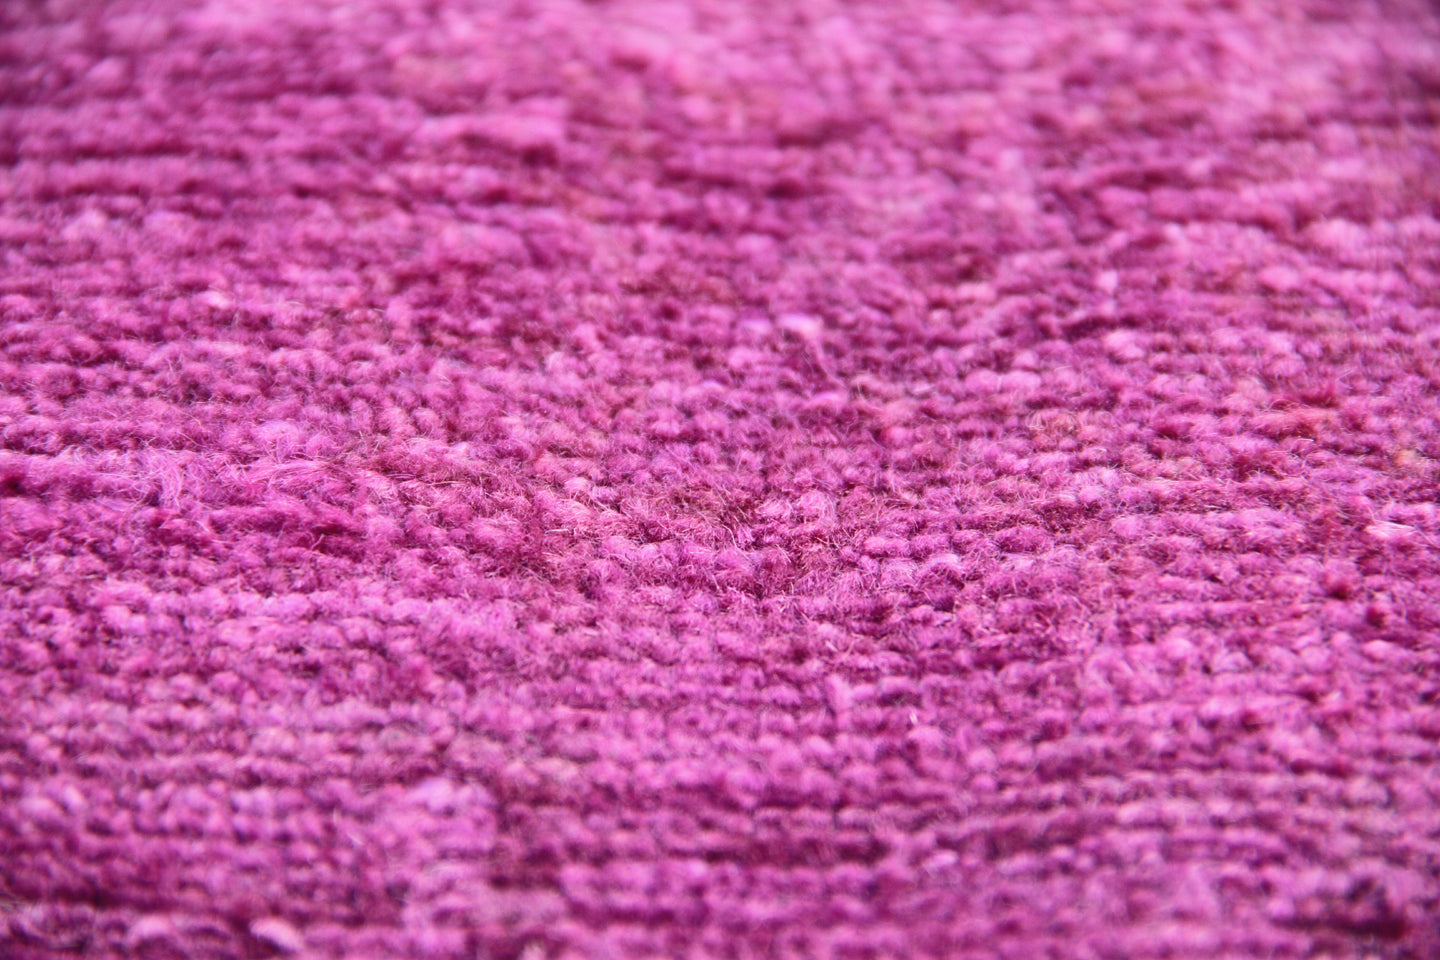 7'x10' Purple Persian Design Ariana Overdyed Area Rug